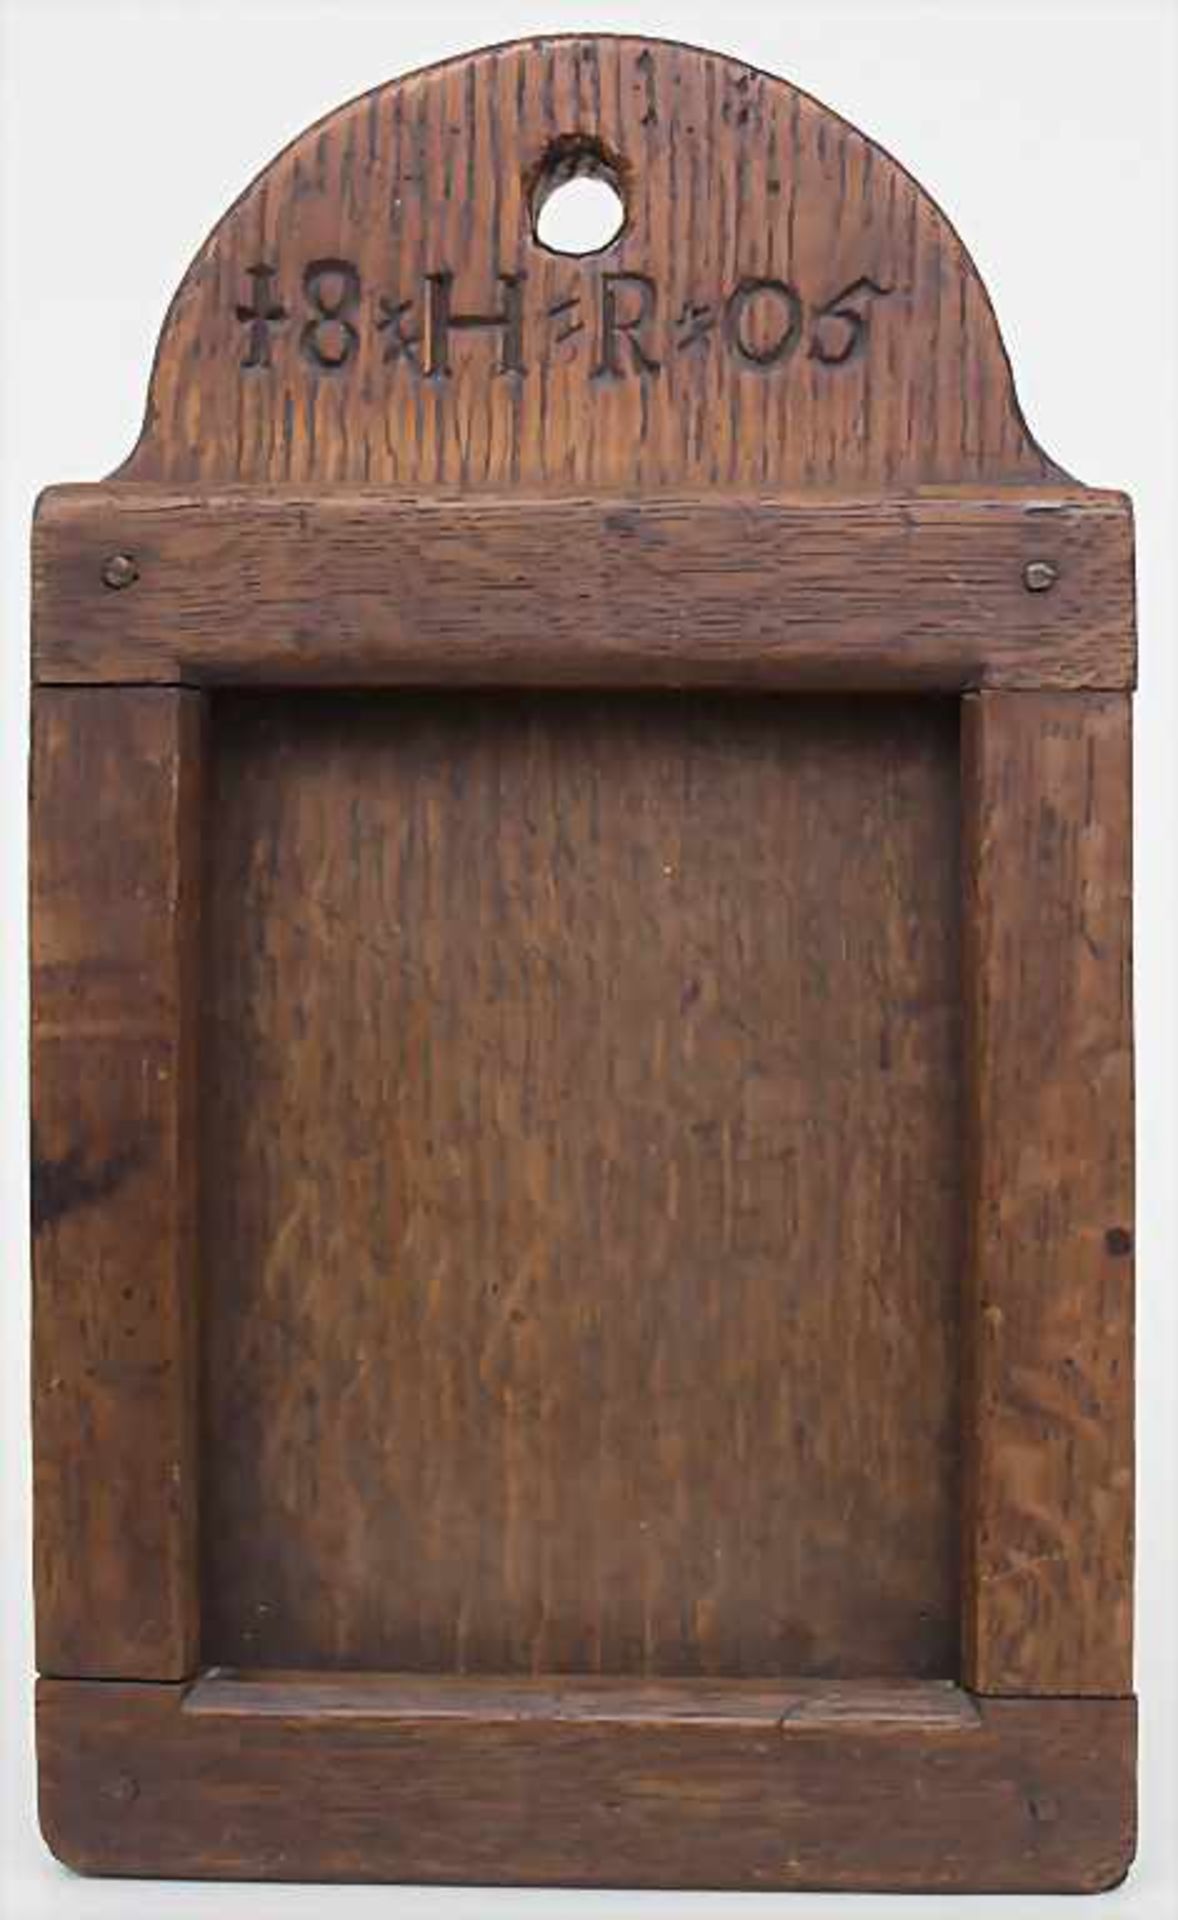 Wirtshausschild / A pub sign, 18./19. Jh.Material: Holz, Maße: H. 34cm, B. 20 cm, Zustand: gut- - -